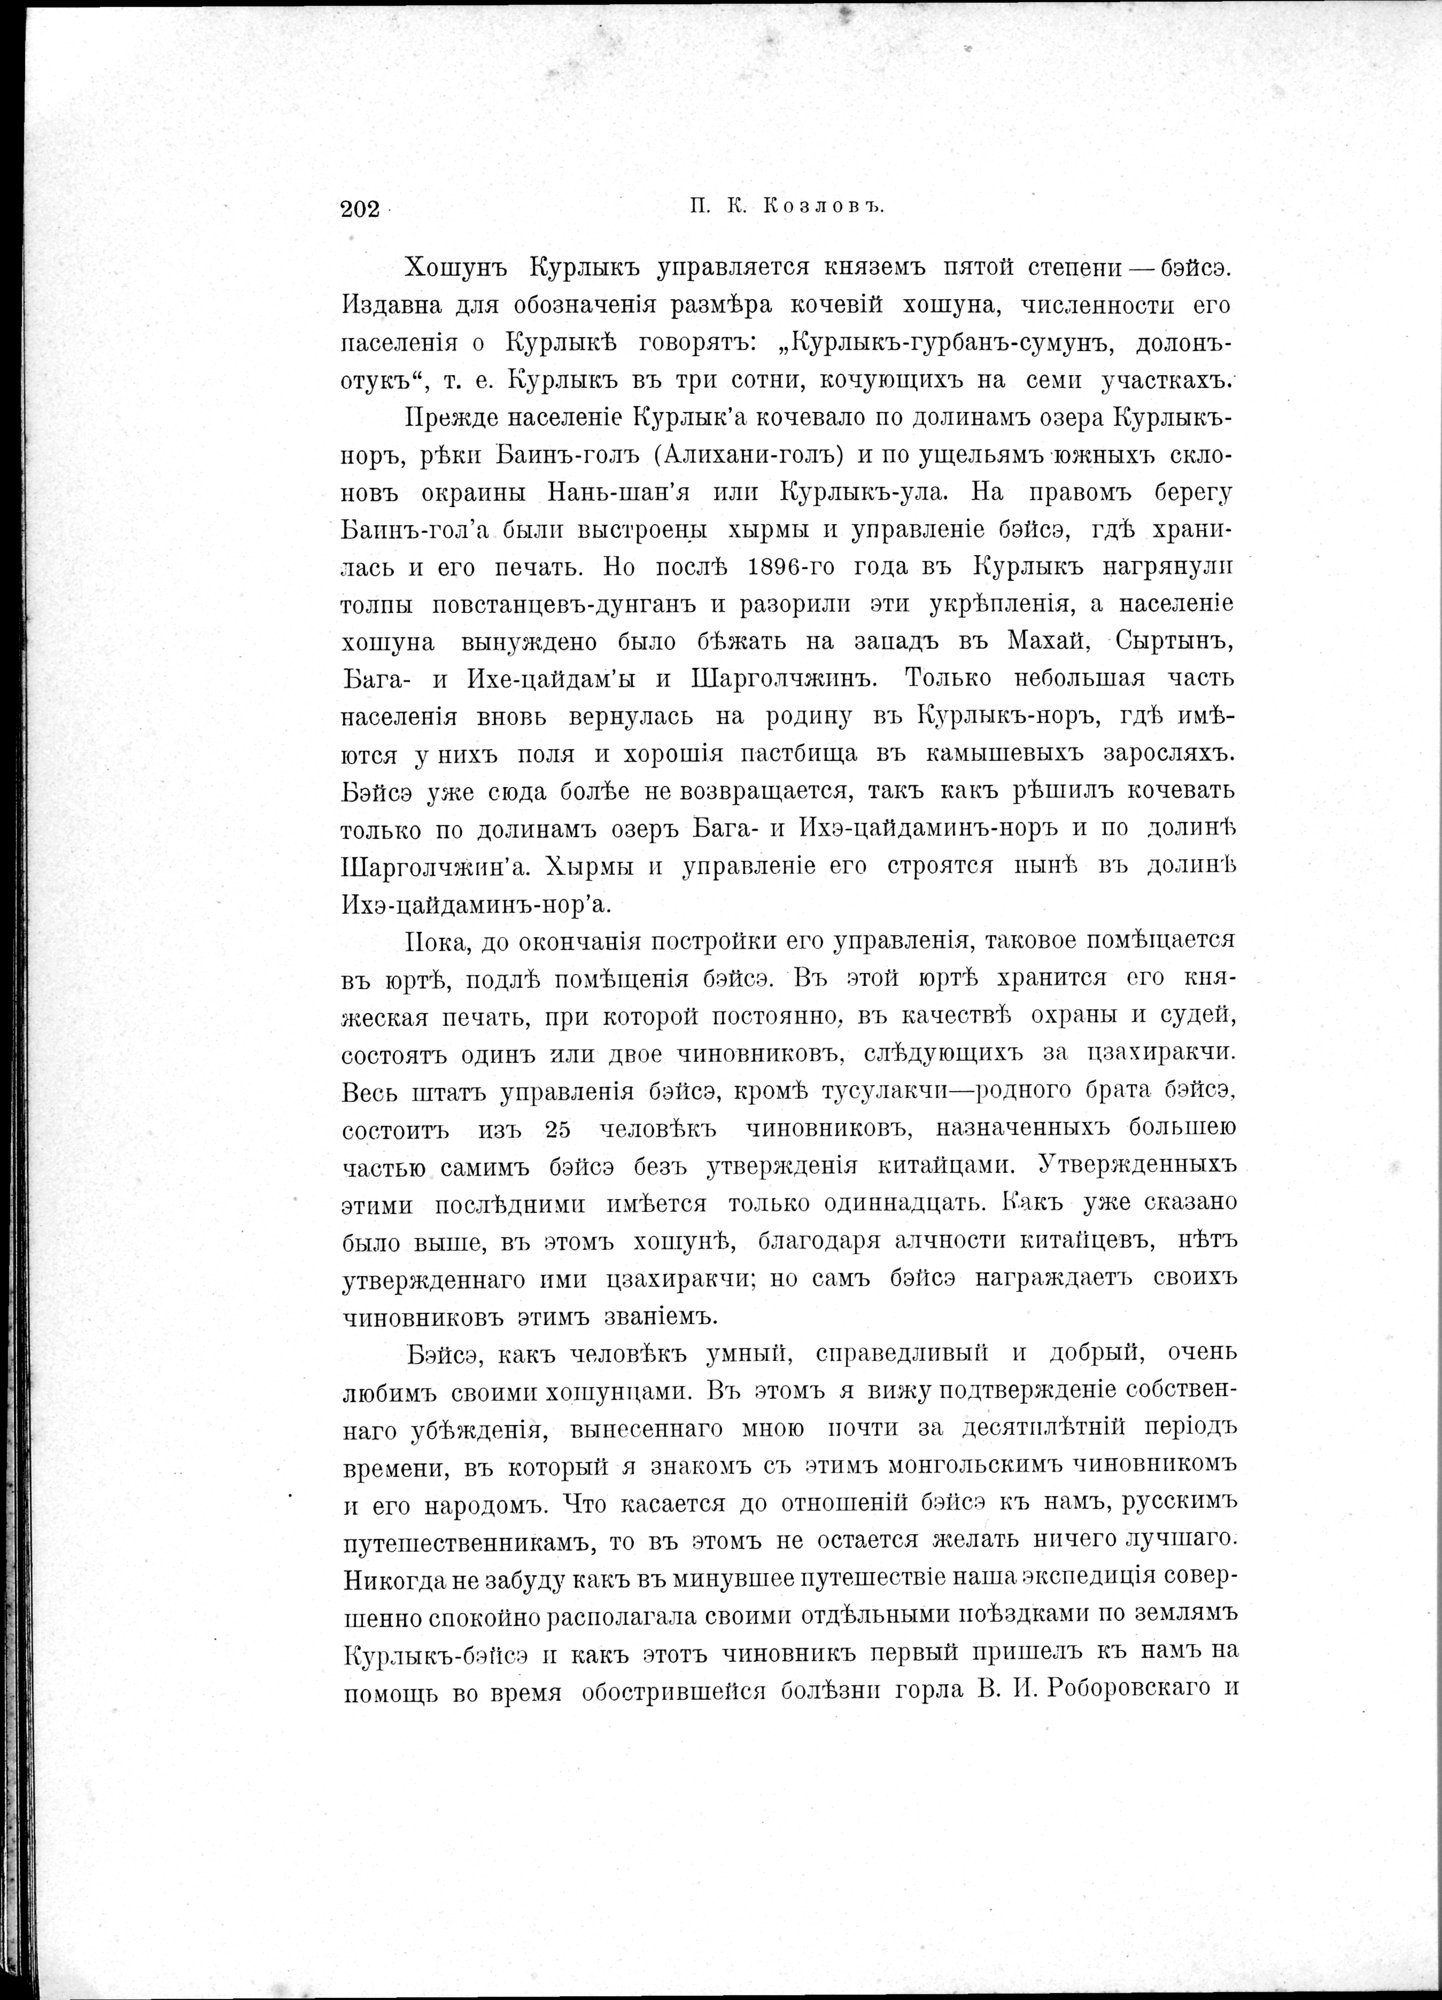 Mongoliia i Kam : vol.1 / Page 250 (Grayscale High Resolution Image)